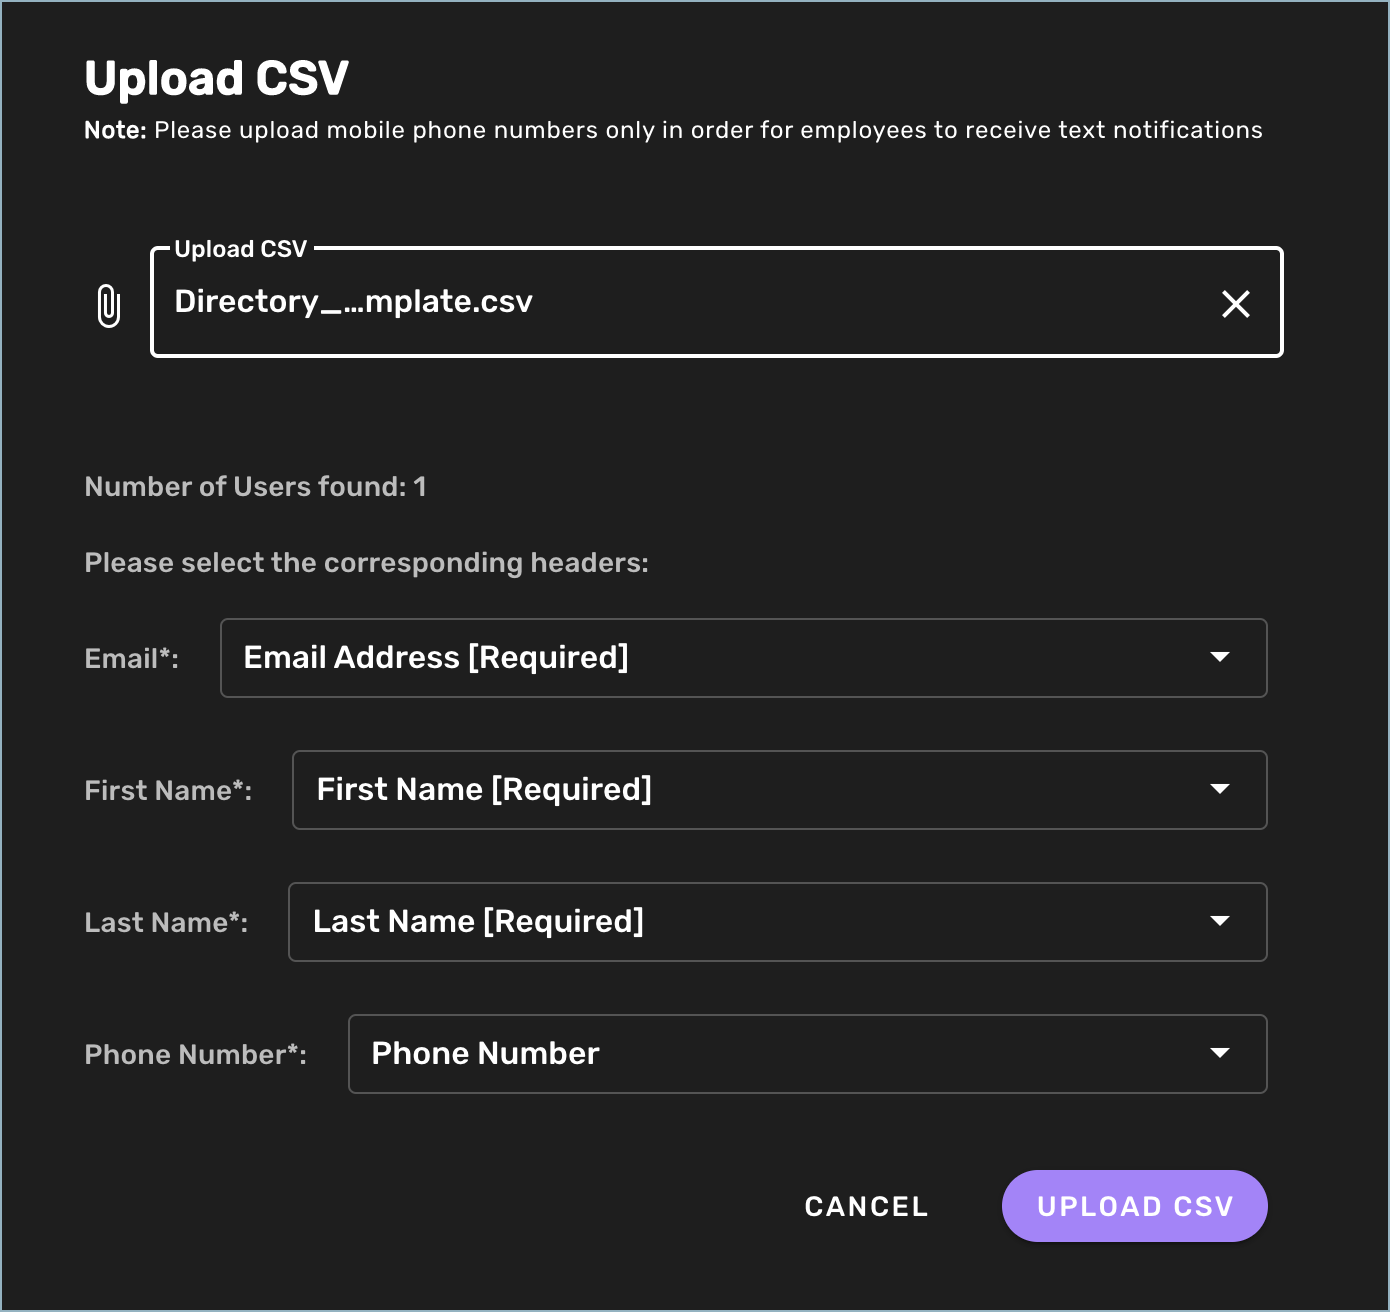 Upload CSV window - settings